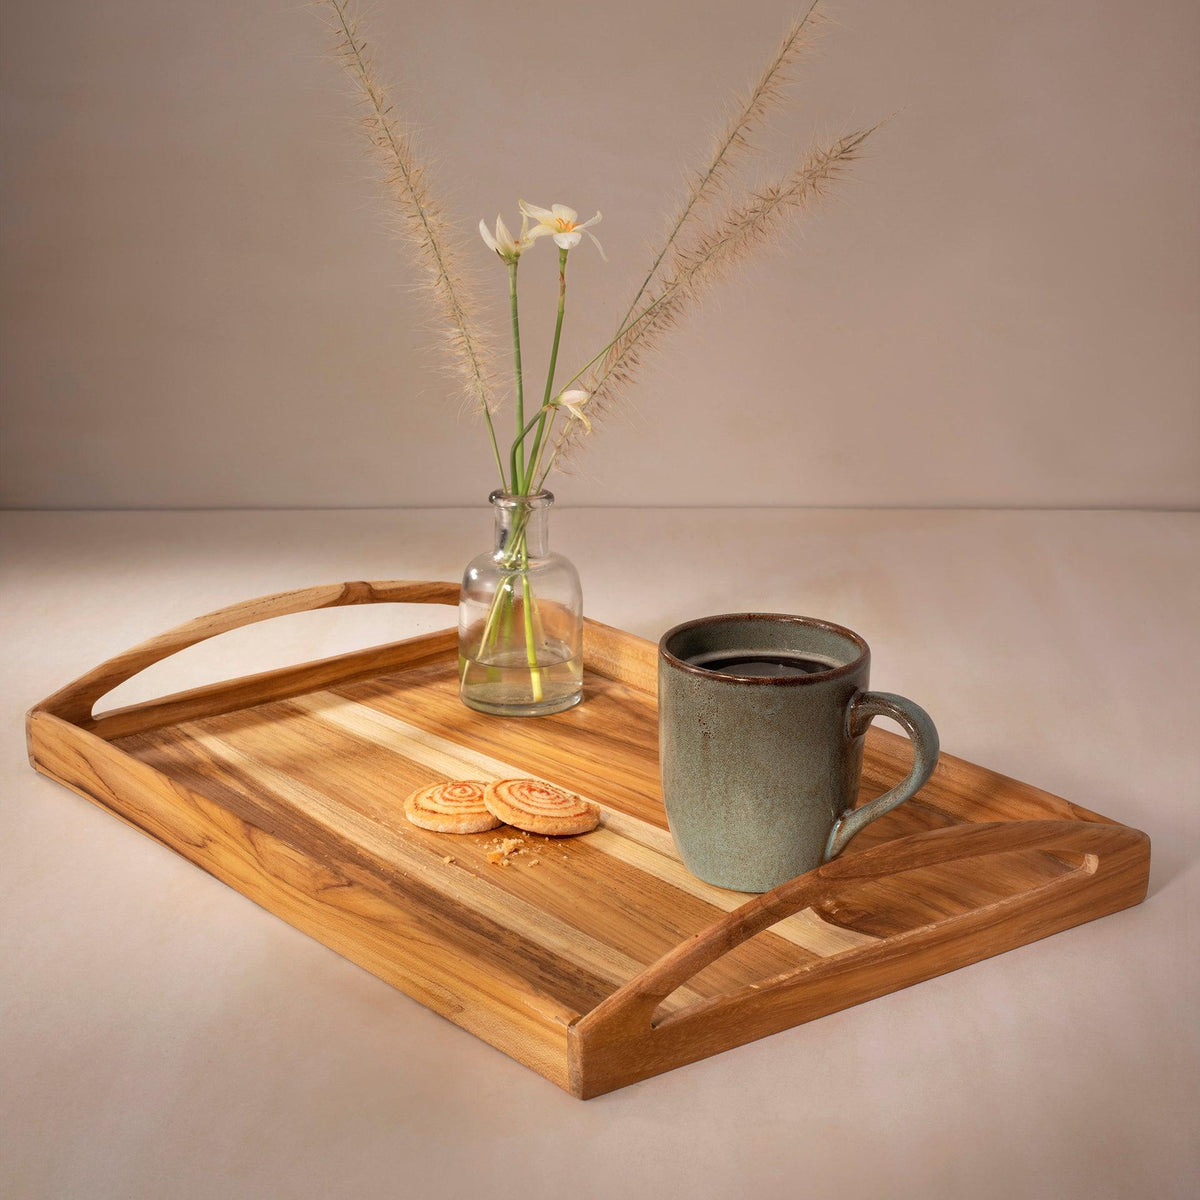 in teak wooden tray- large - ellementry